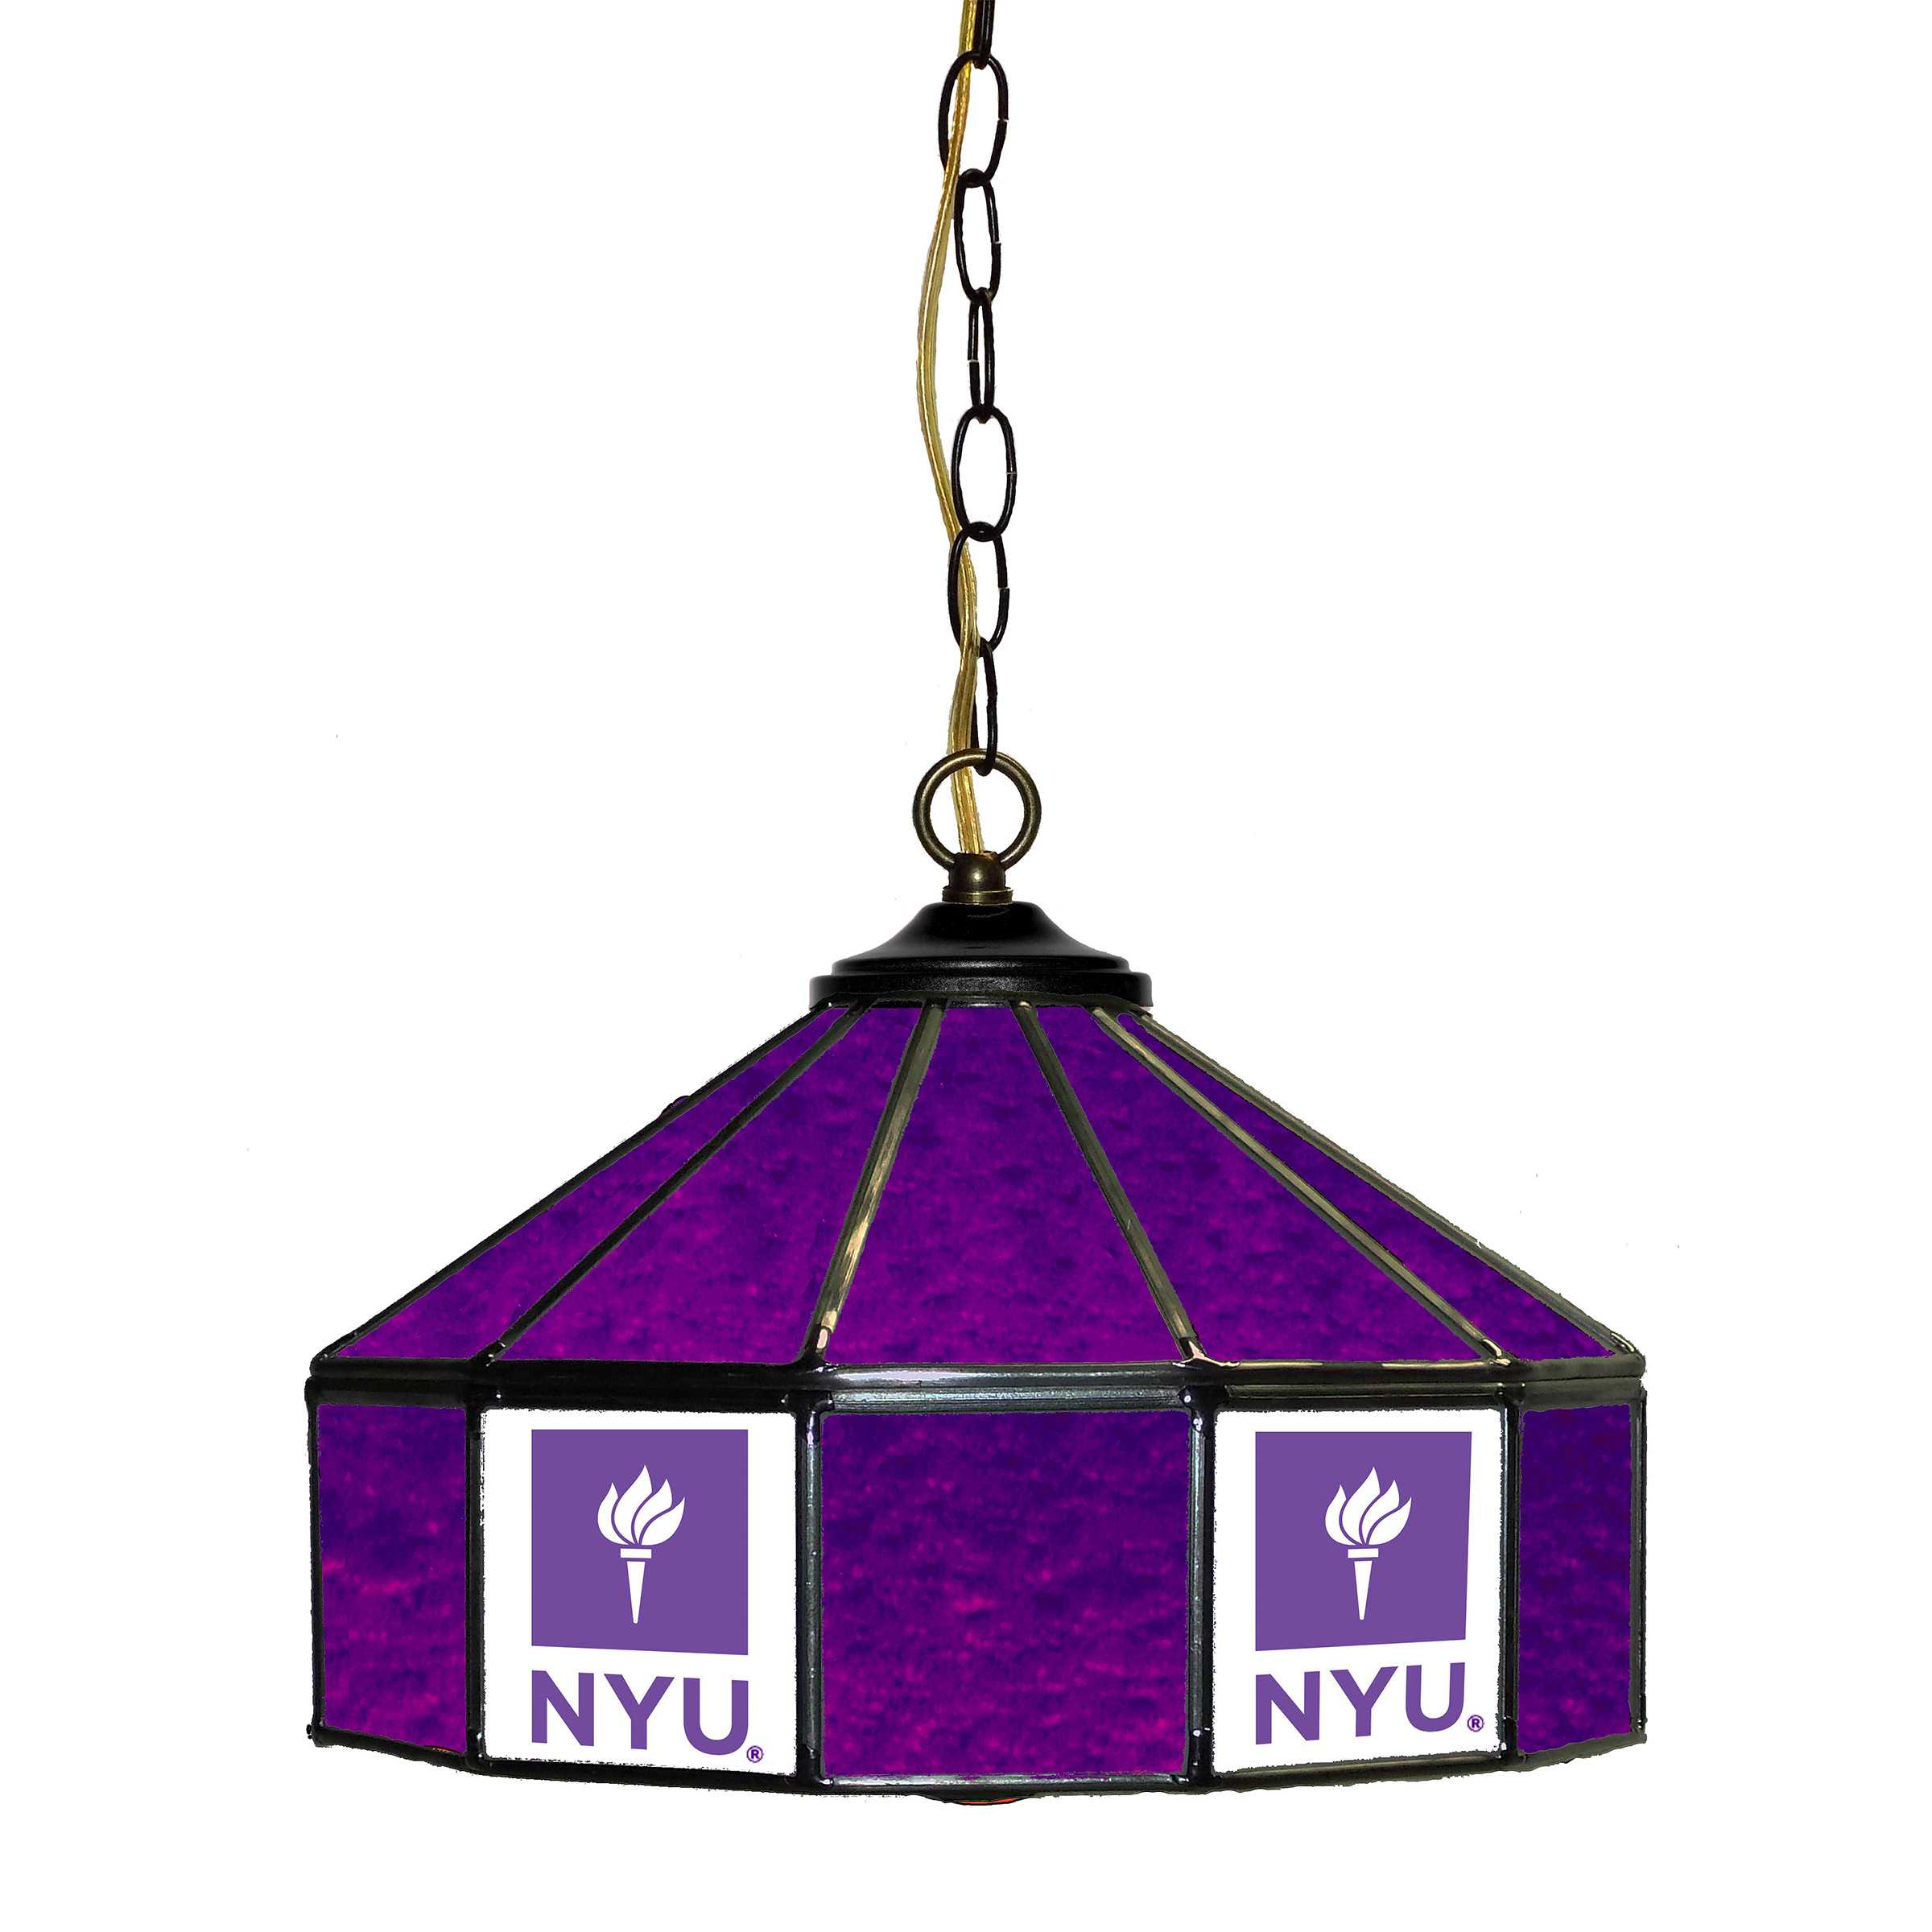 NEW YORK UNIVERSITY 14" GLASS PUB LAMP